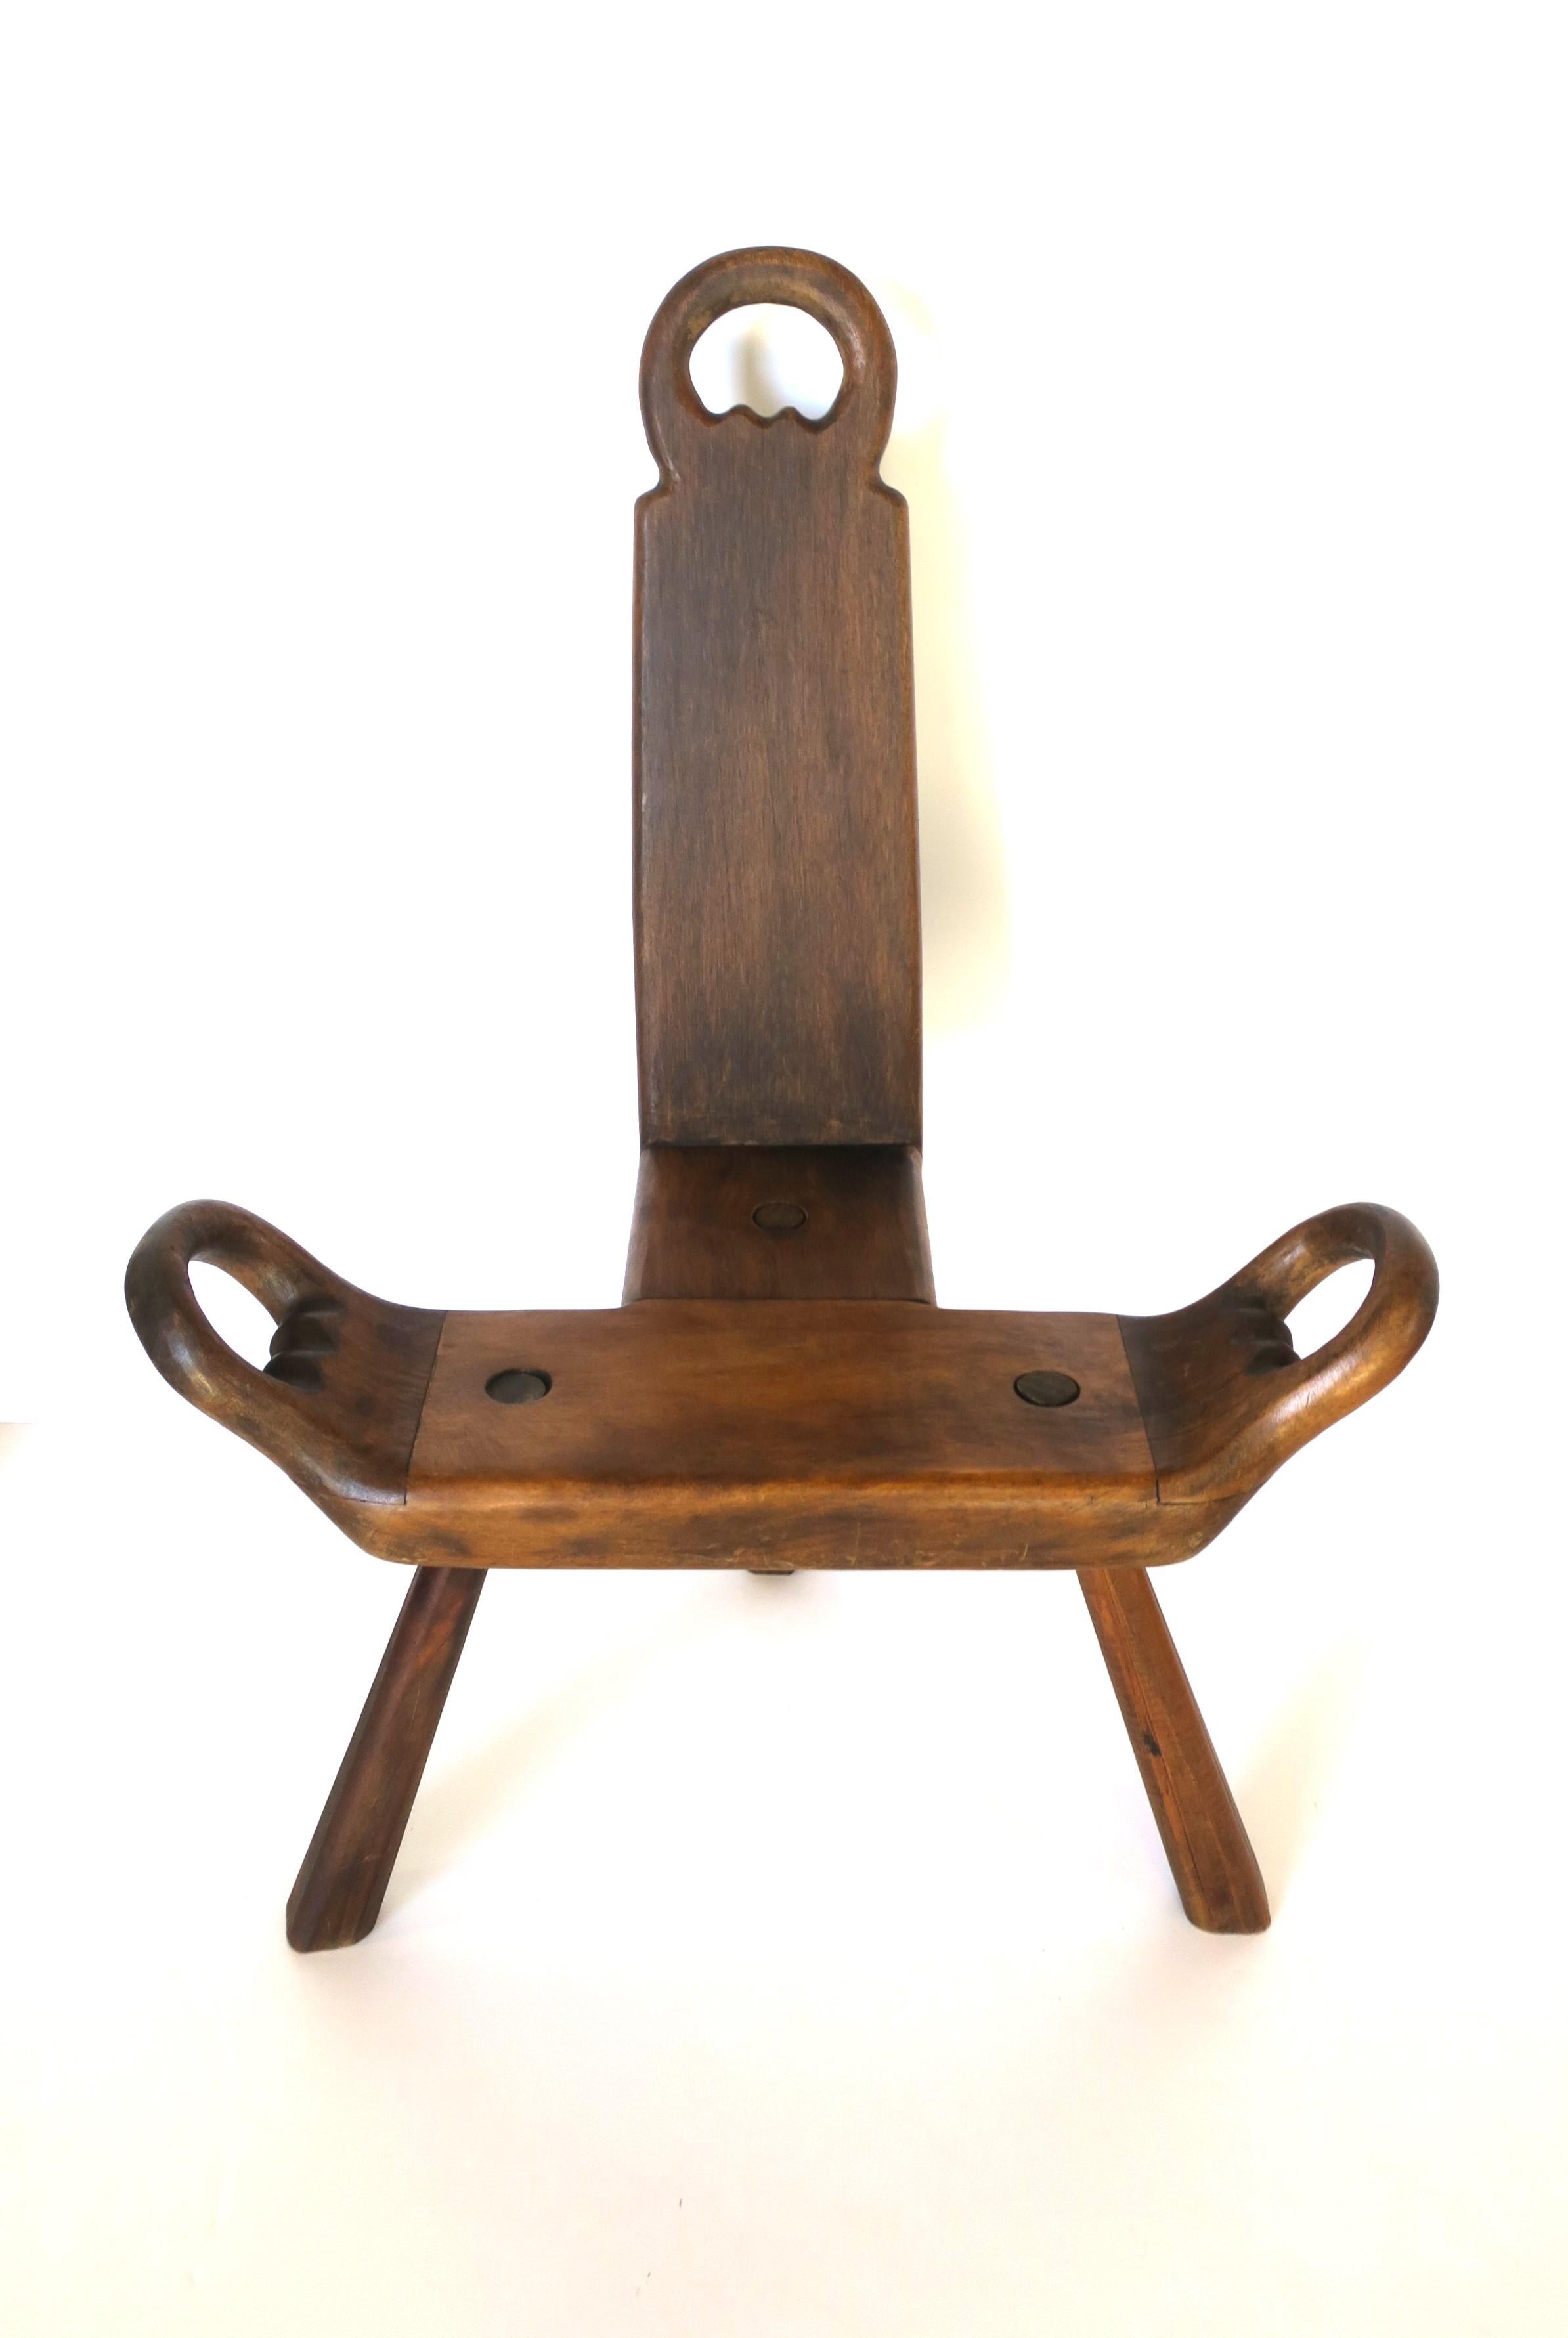 Renaissance Revival Italian Wood Sgabello Side Chair or Stool